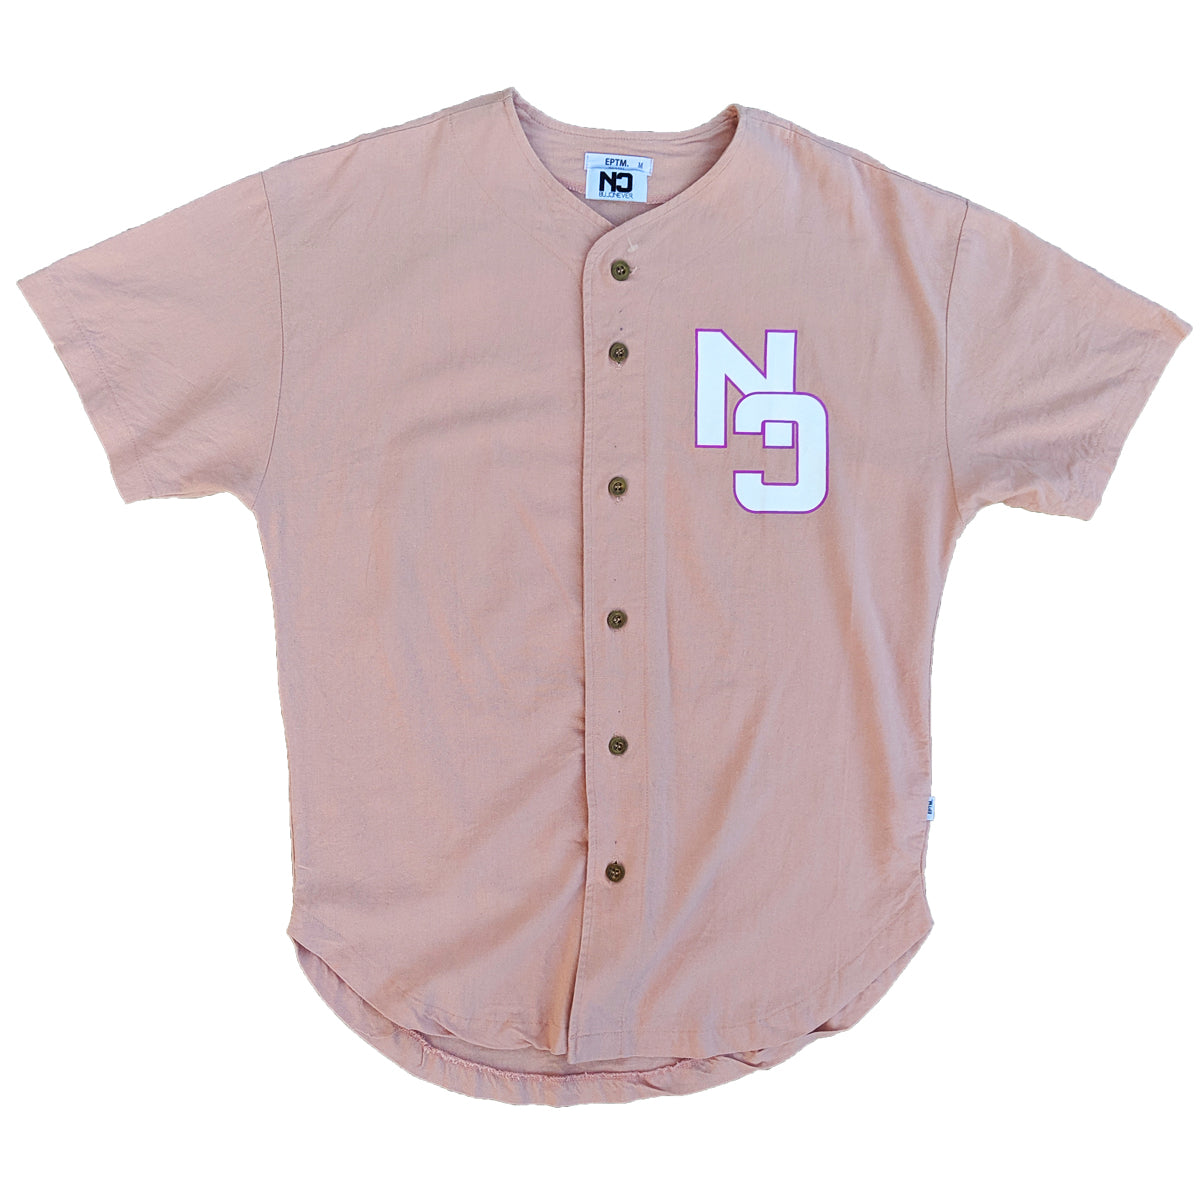 CN Vintage Baseball Jersey - Salmon